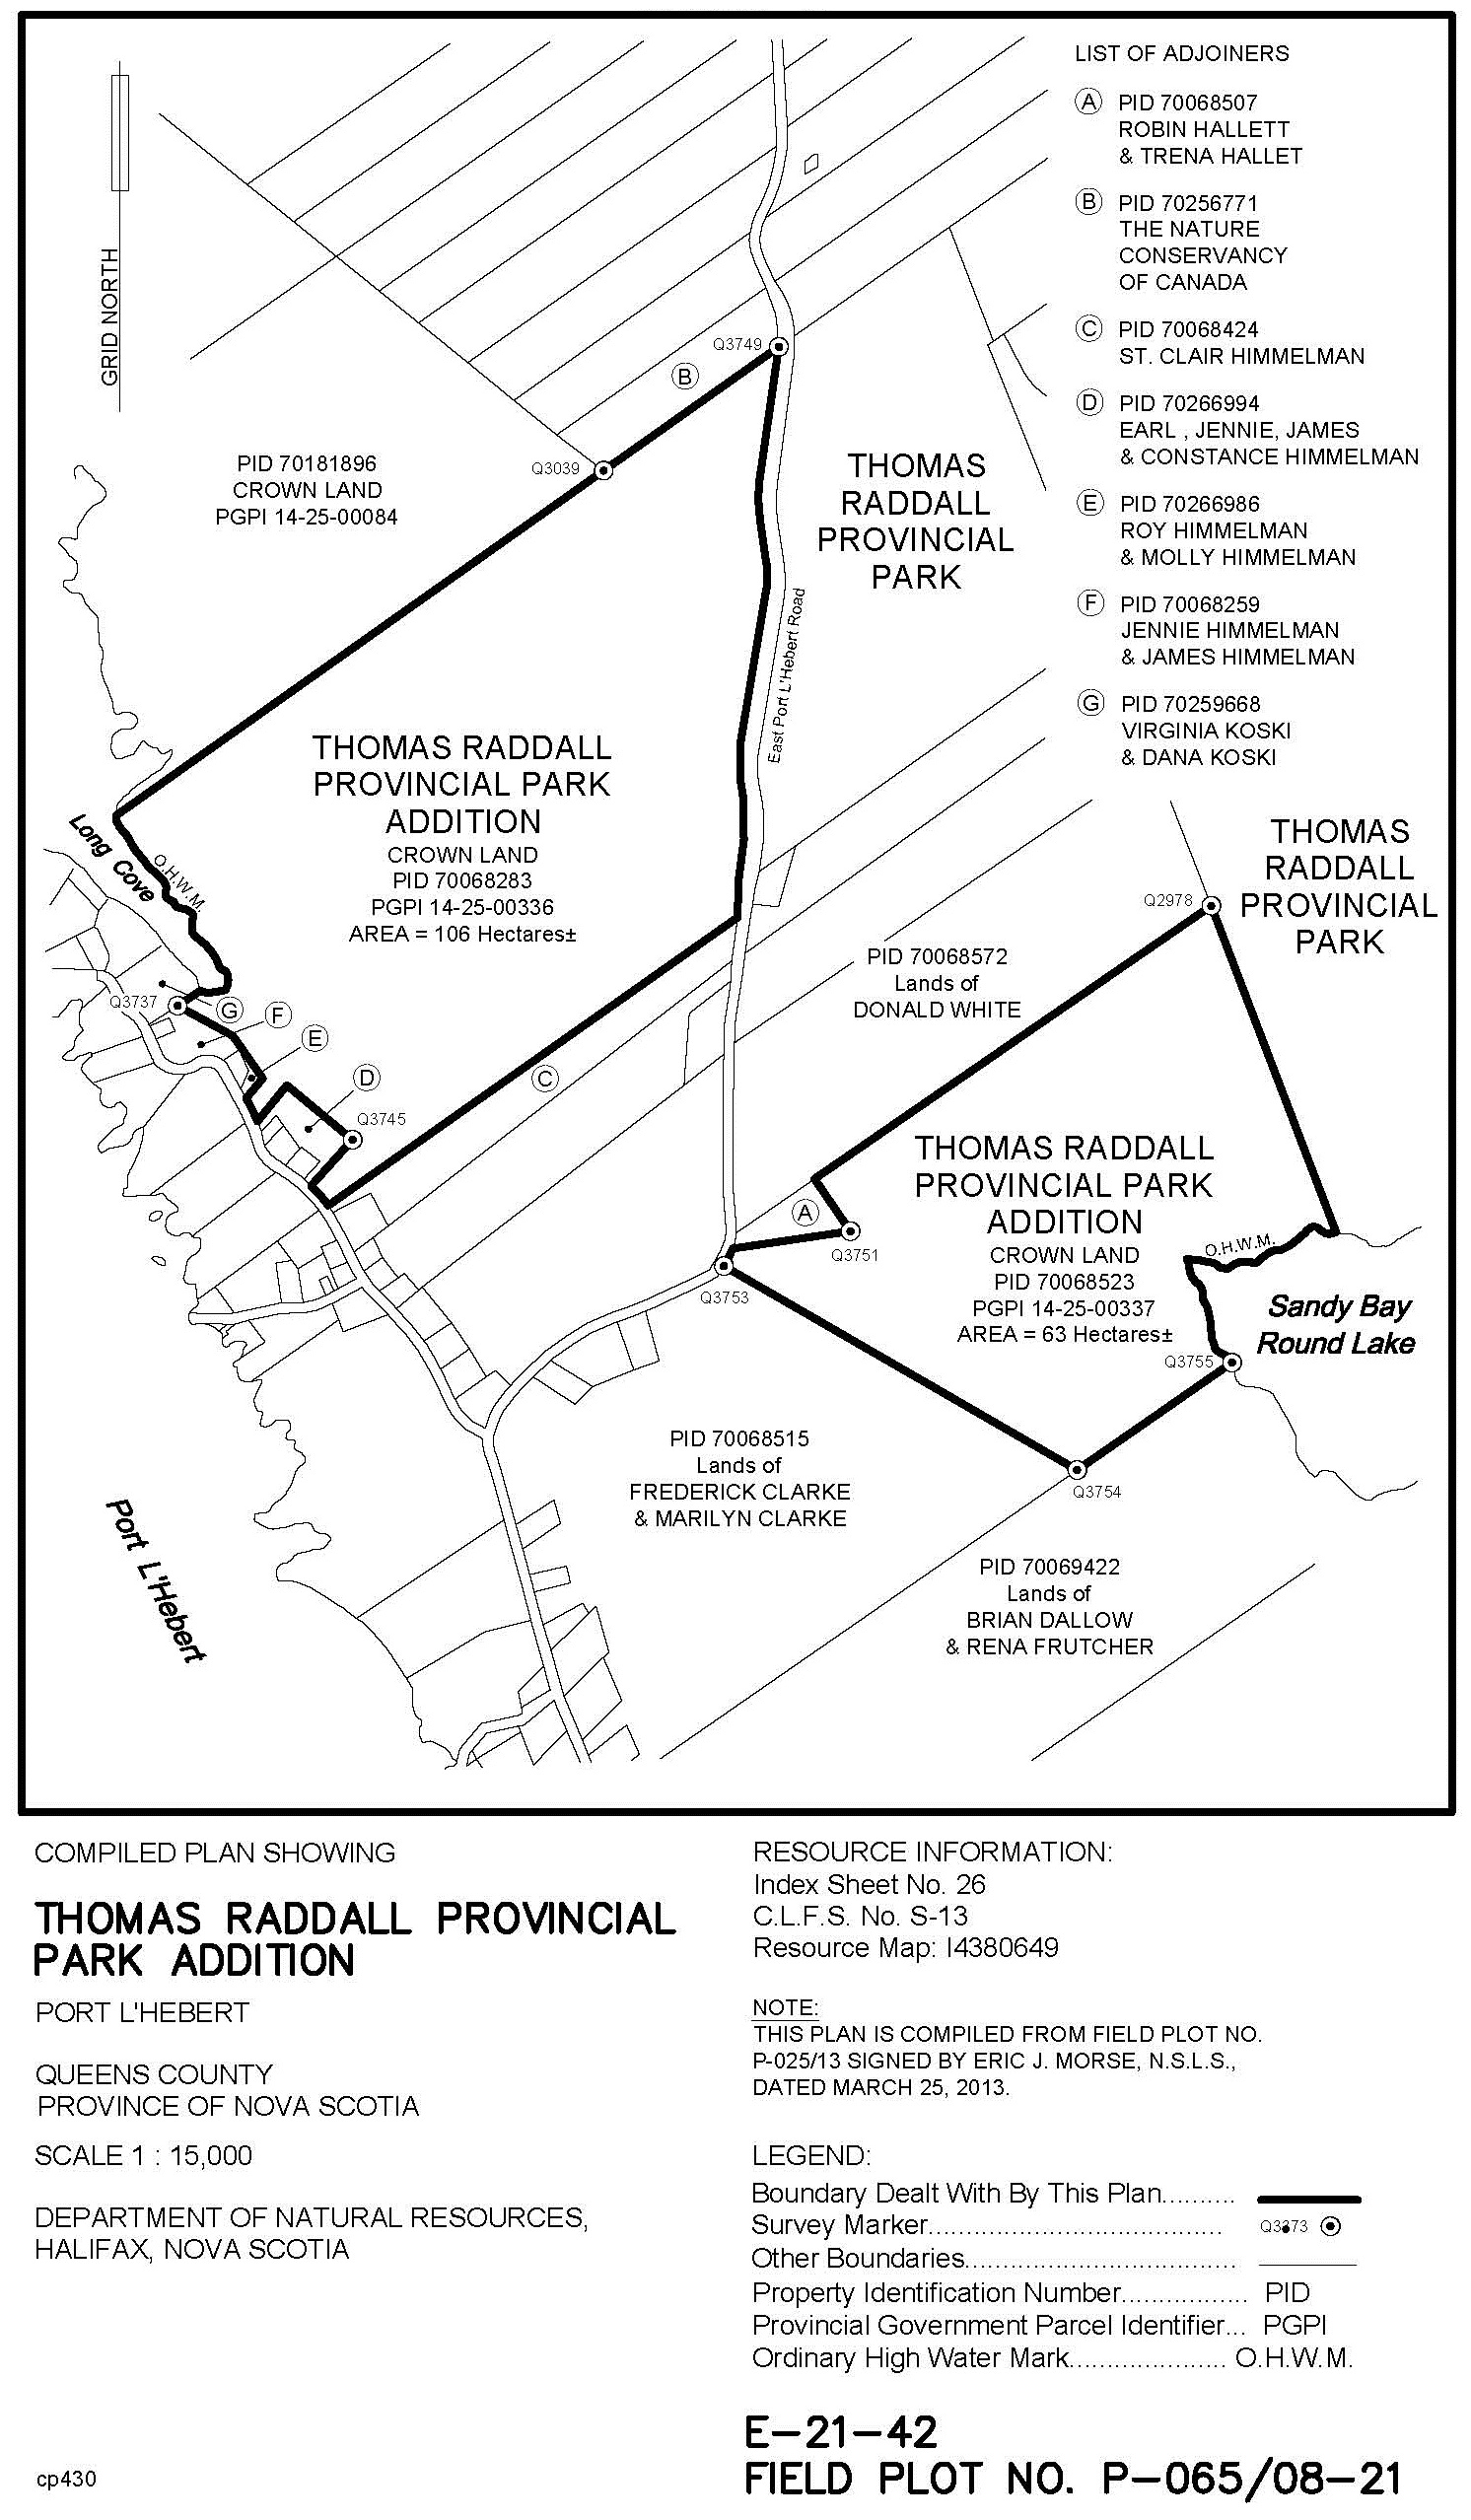 Map of Thomas Raddall Provincial Park addition